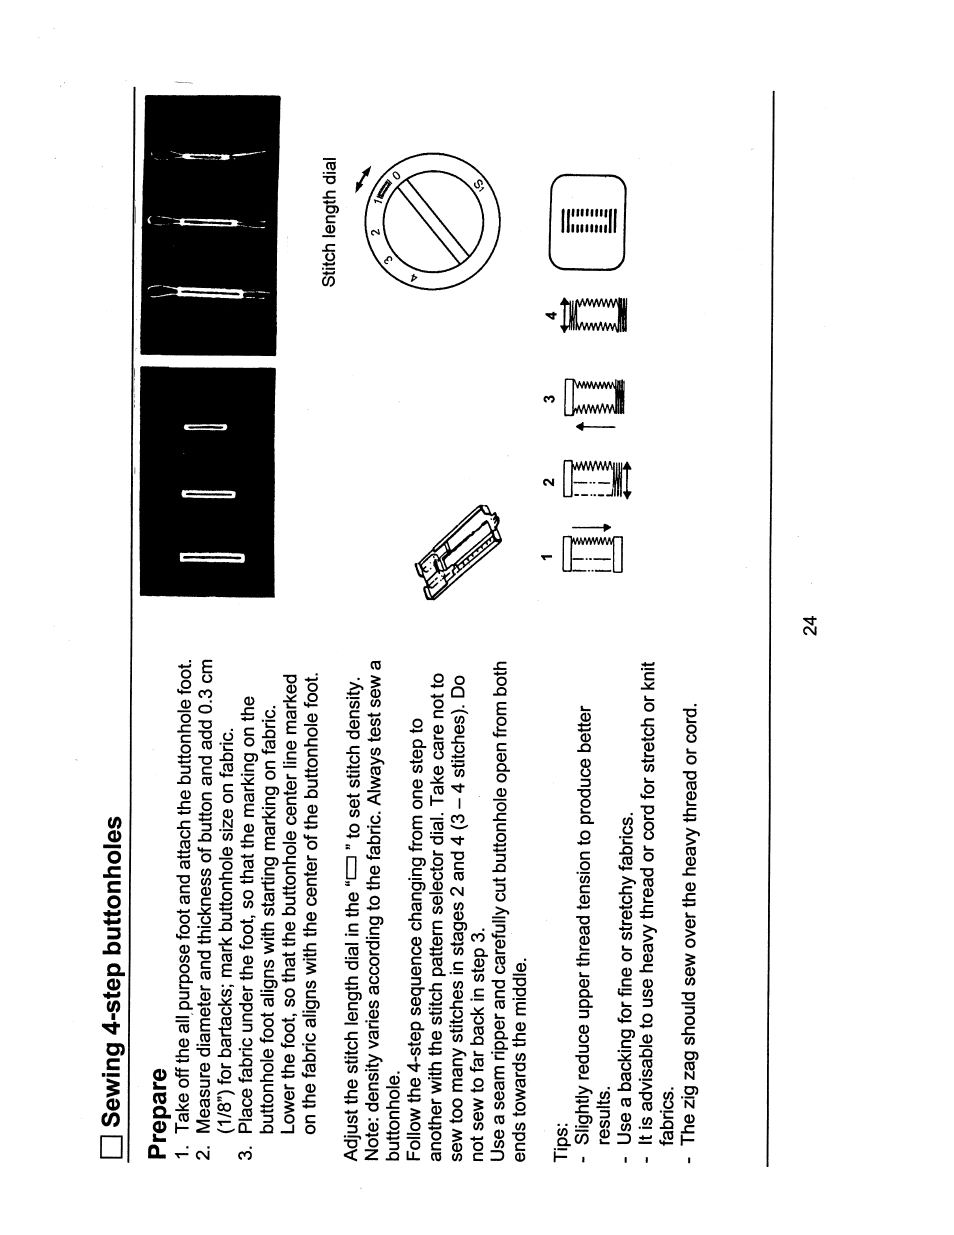 Prepare, Sewing 4-step buttonholes prepare | SINGER 1116 User Manual | Page 27 / 41